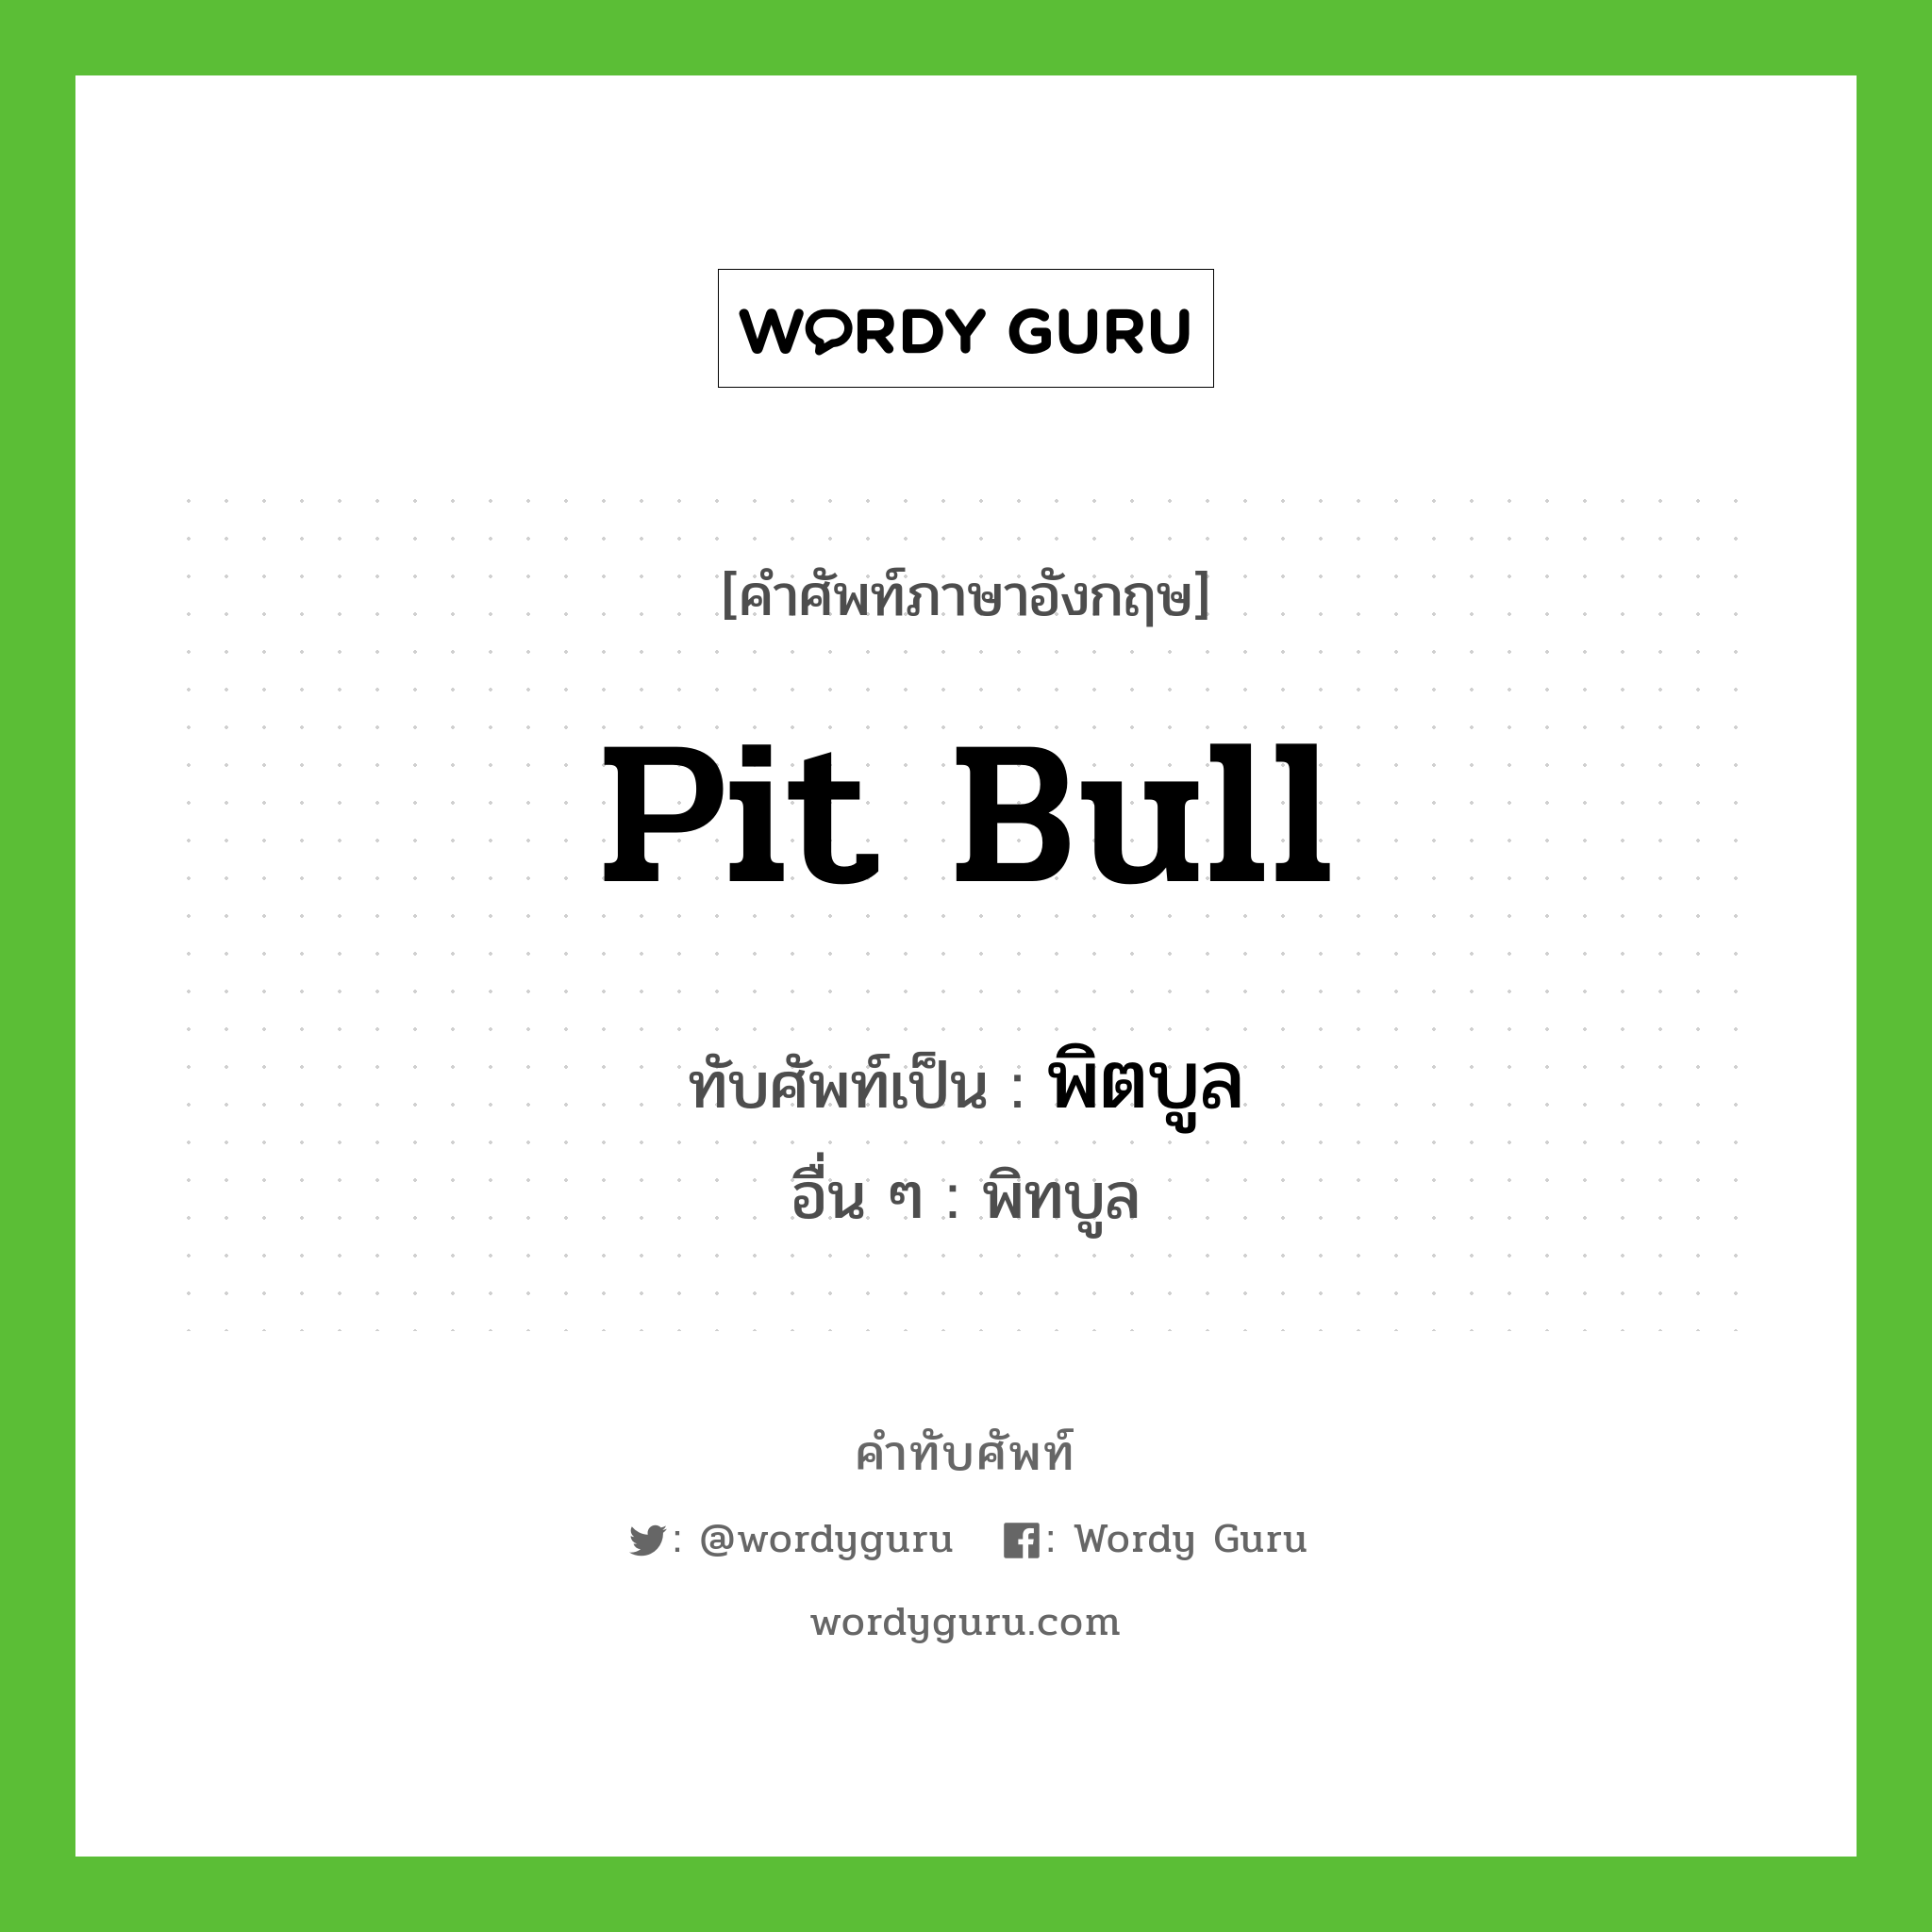 Pit bull เขียนเป็นคำไทยว่าอะไร?, คำศัพท์ภาษาอังกฤษ Pit bull ทับศัพท์เป็น พิตบูล อื่น ๆ พิทบูล